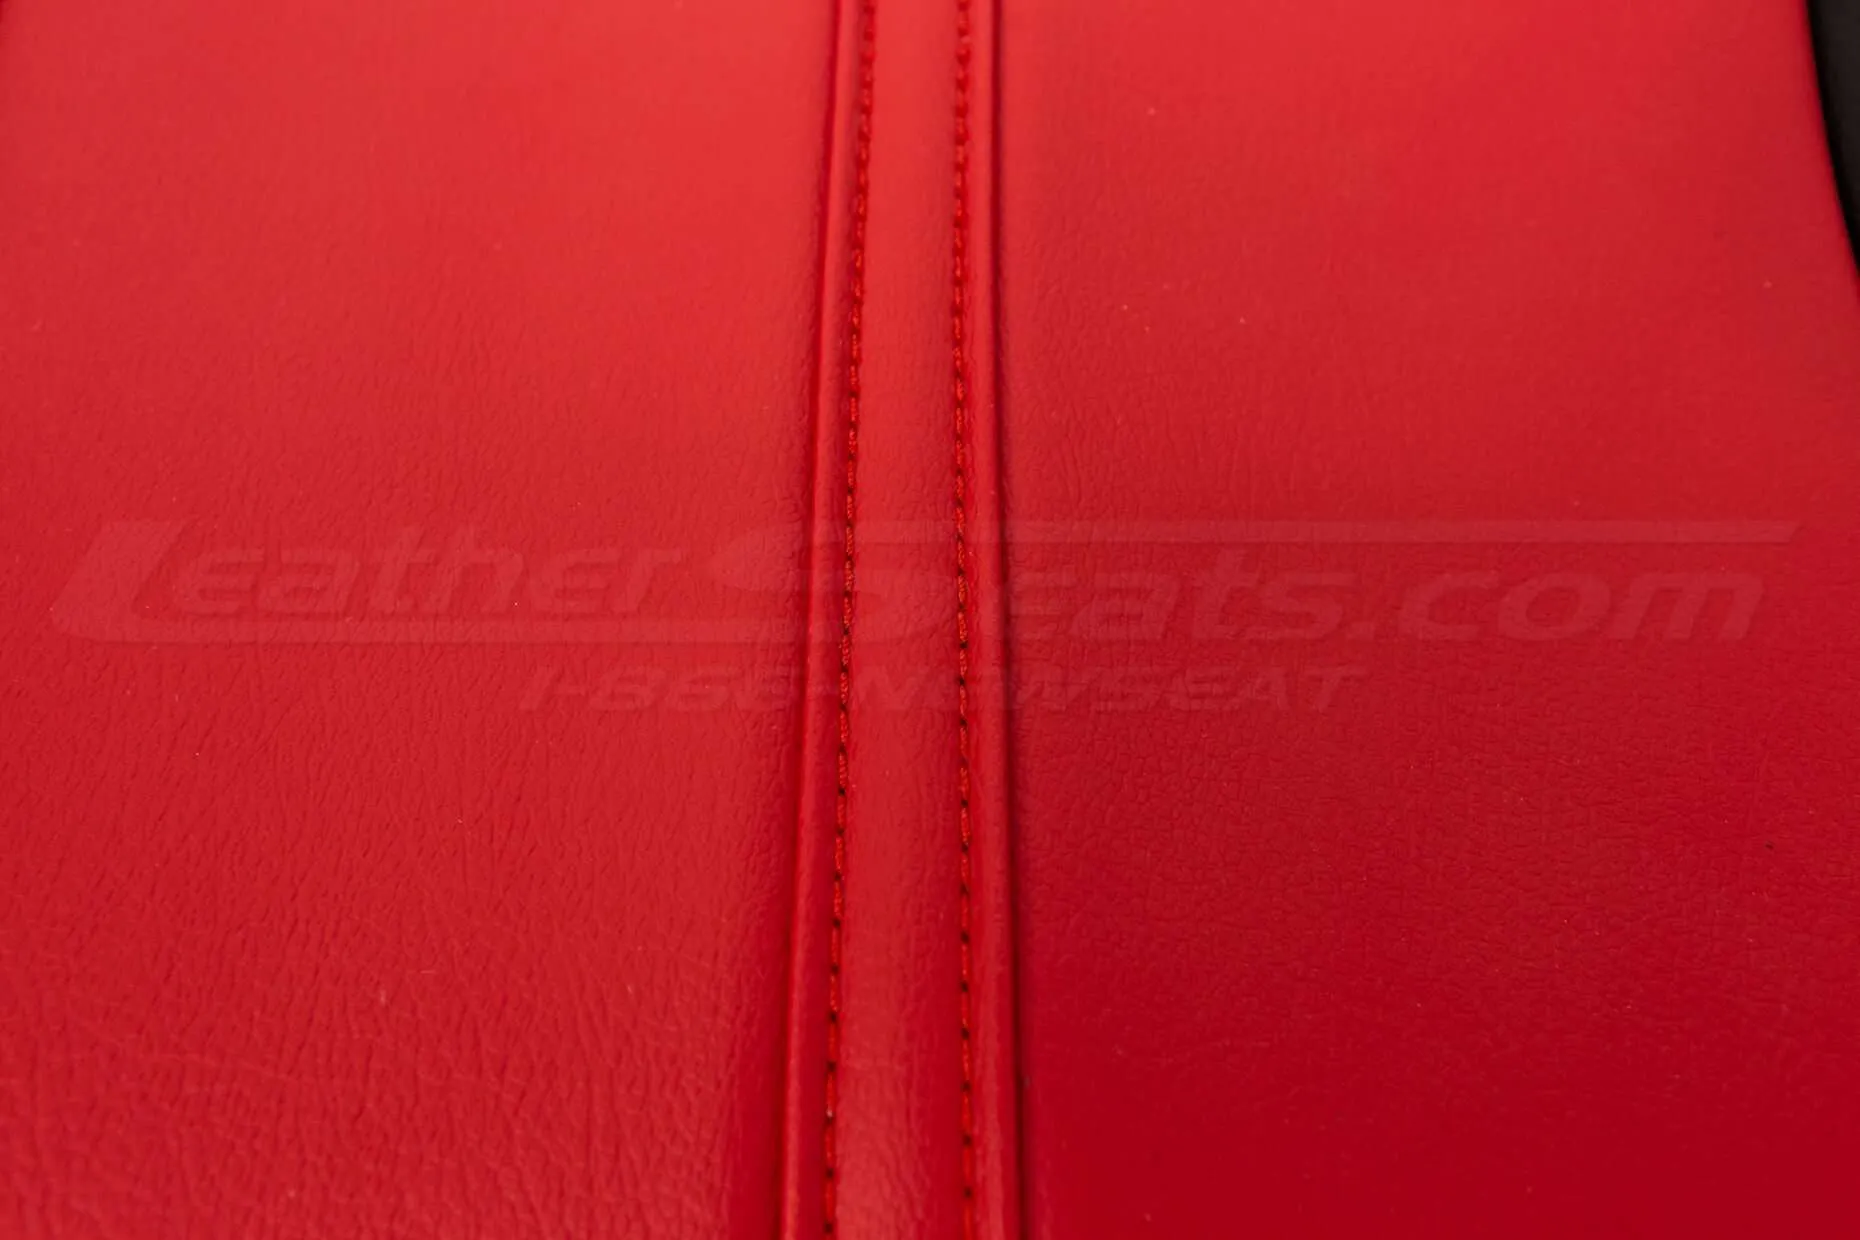 88-92 Chevrolet Camaro Upholstery Kit - Black & Bright Red- Insert Close-up